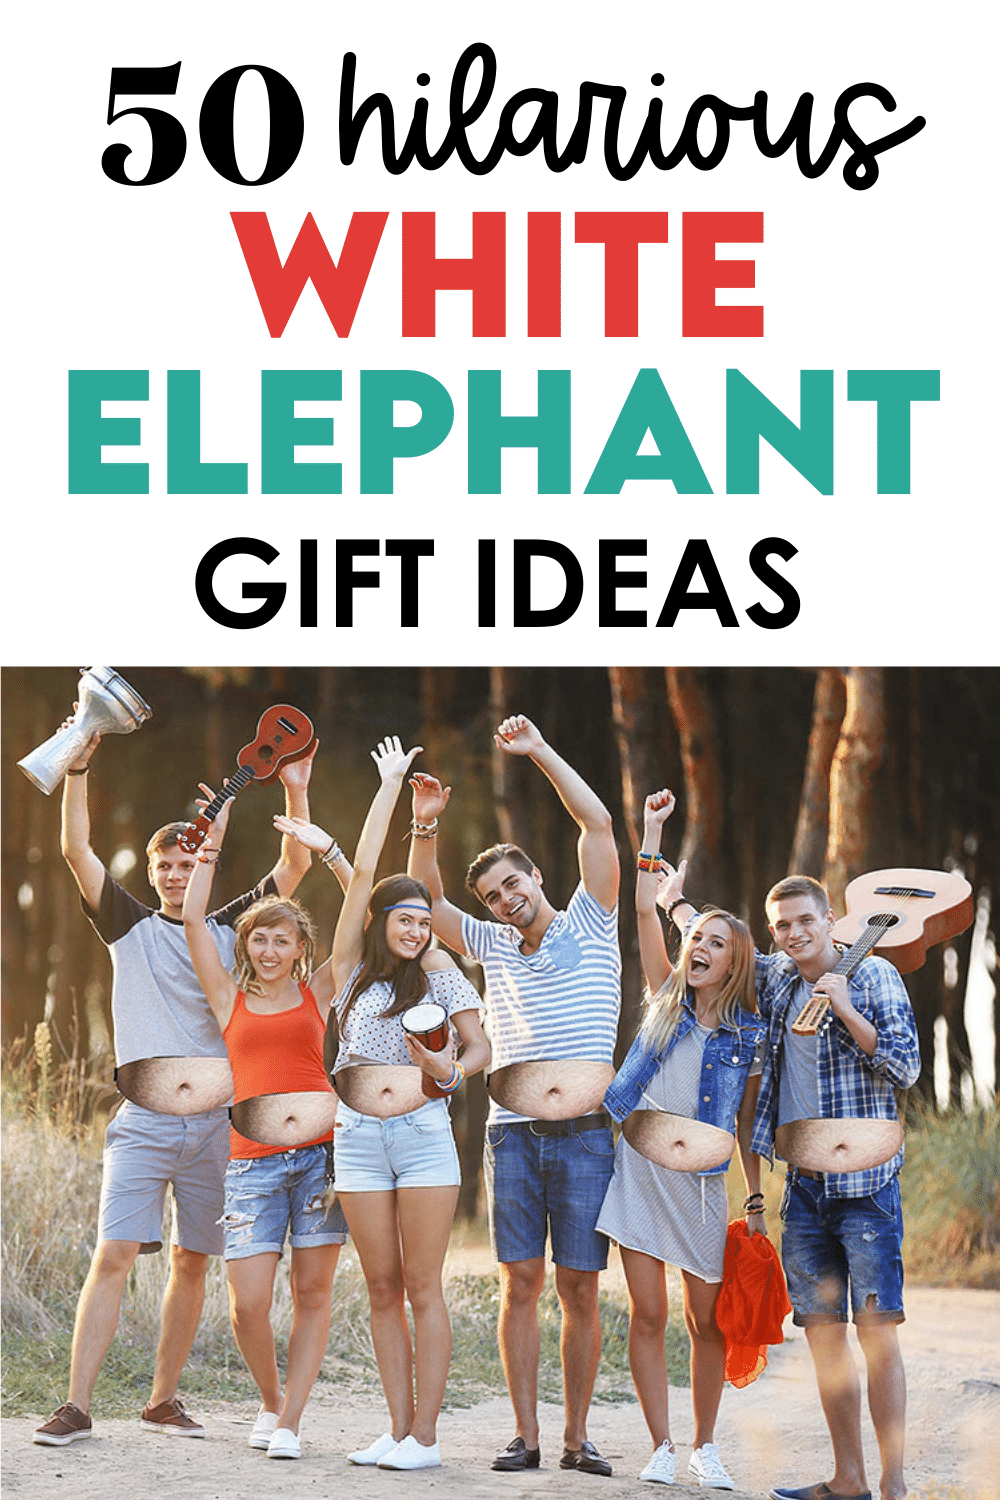 https://www.thedatingdivas.com/wp-content/uploads/2021/10/50-Hilarious-White-Elephant-Gift-Ideas-Opption-1.png